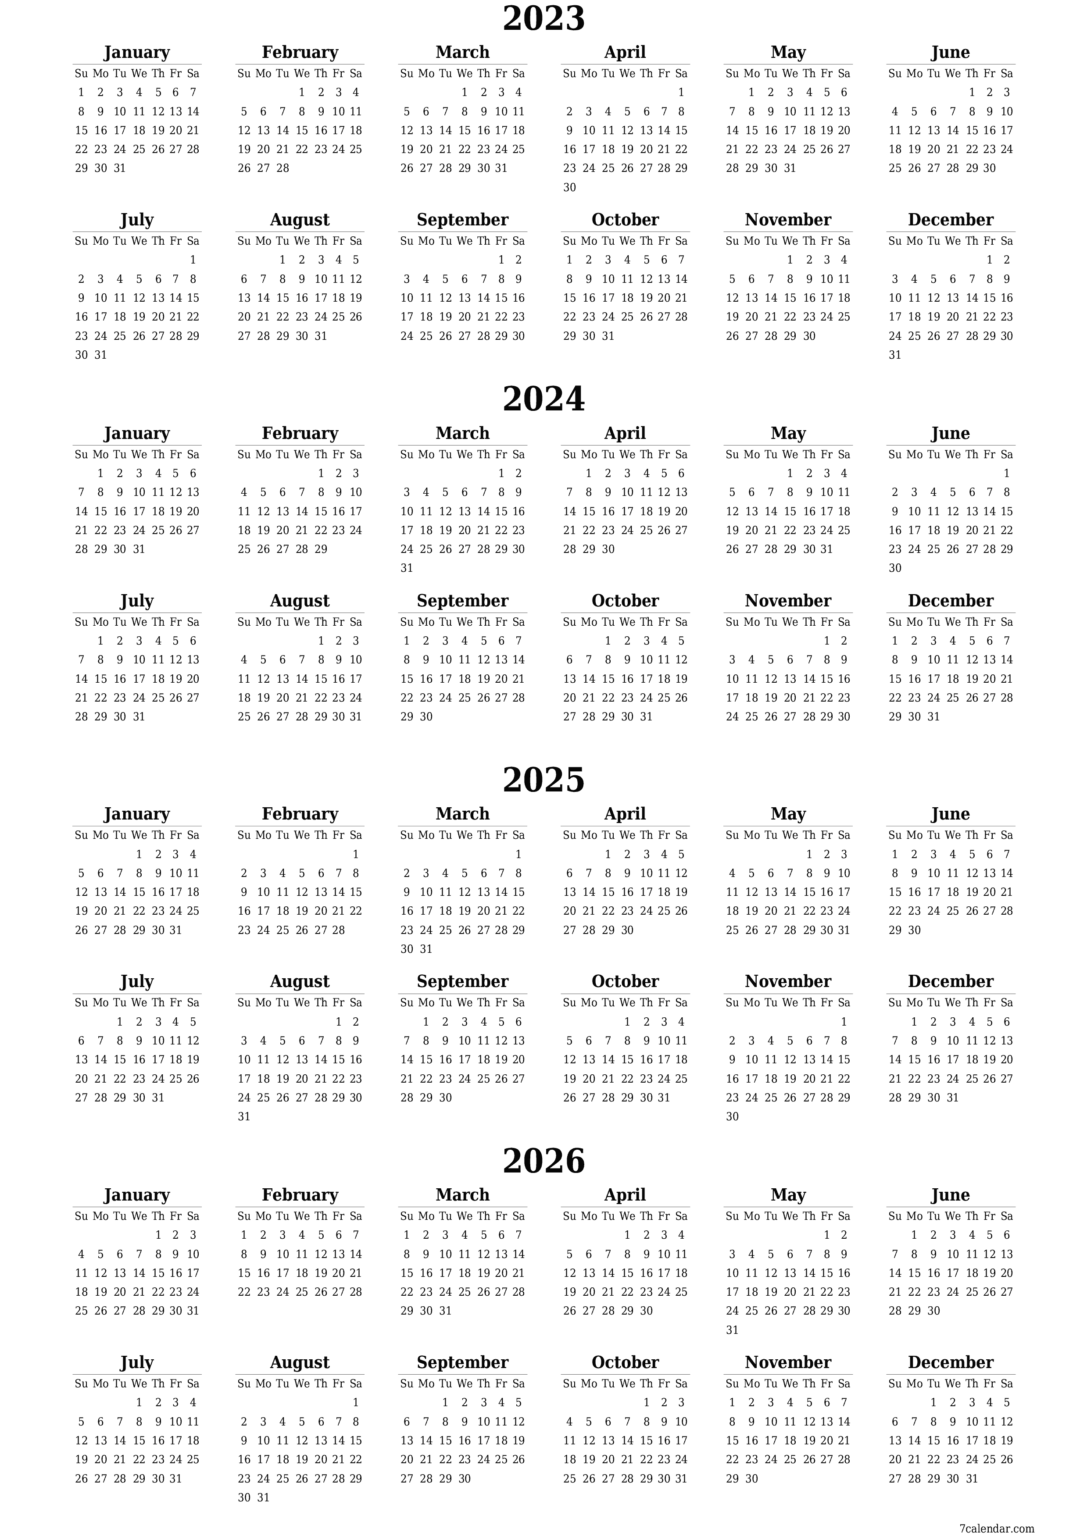 Free Printable ThreeYear Calendars Templates 2023/2024/2025